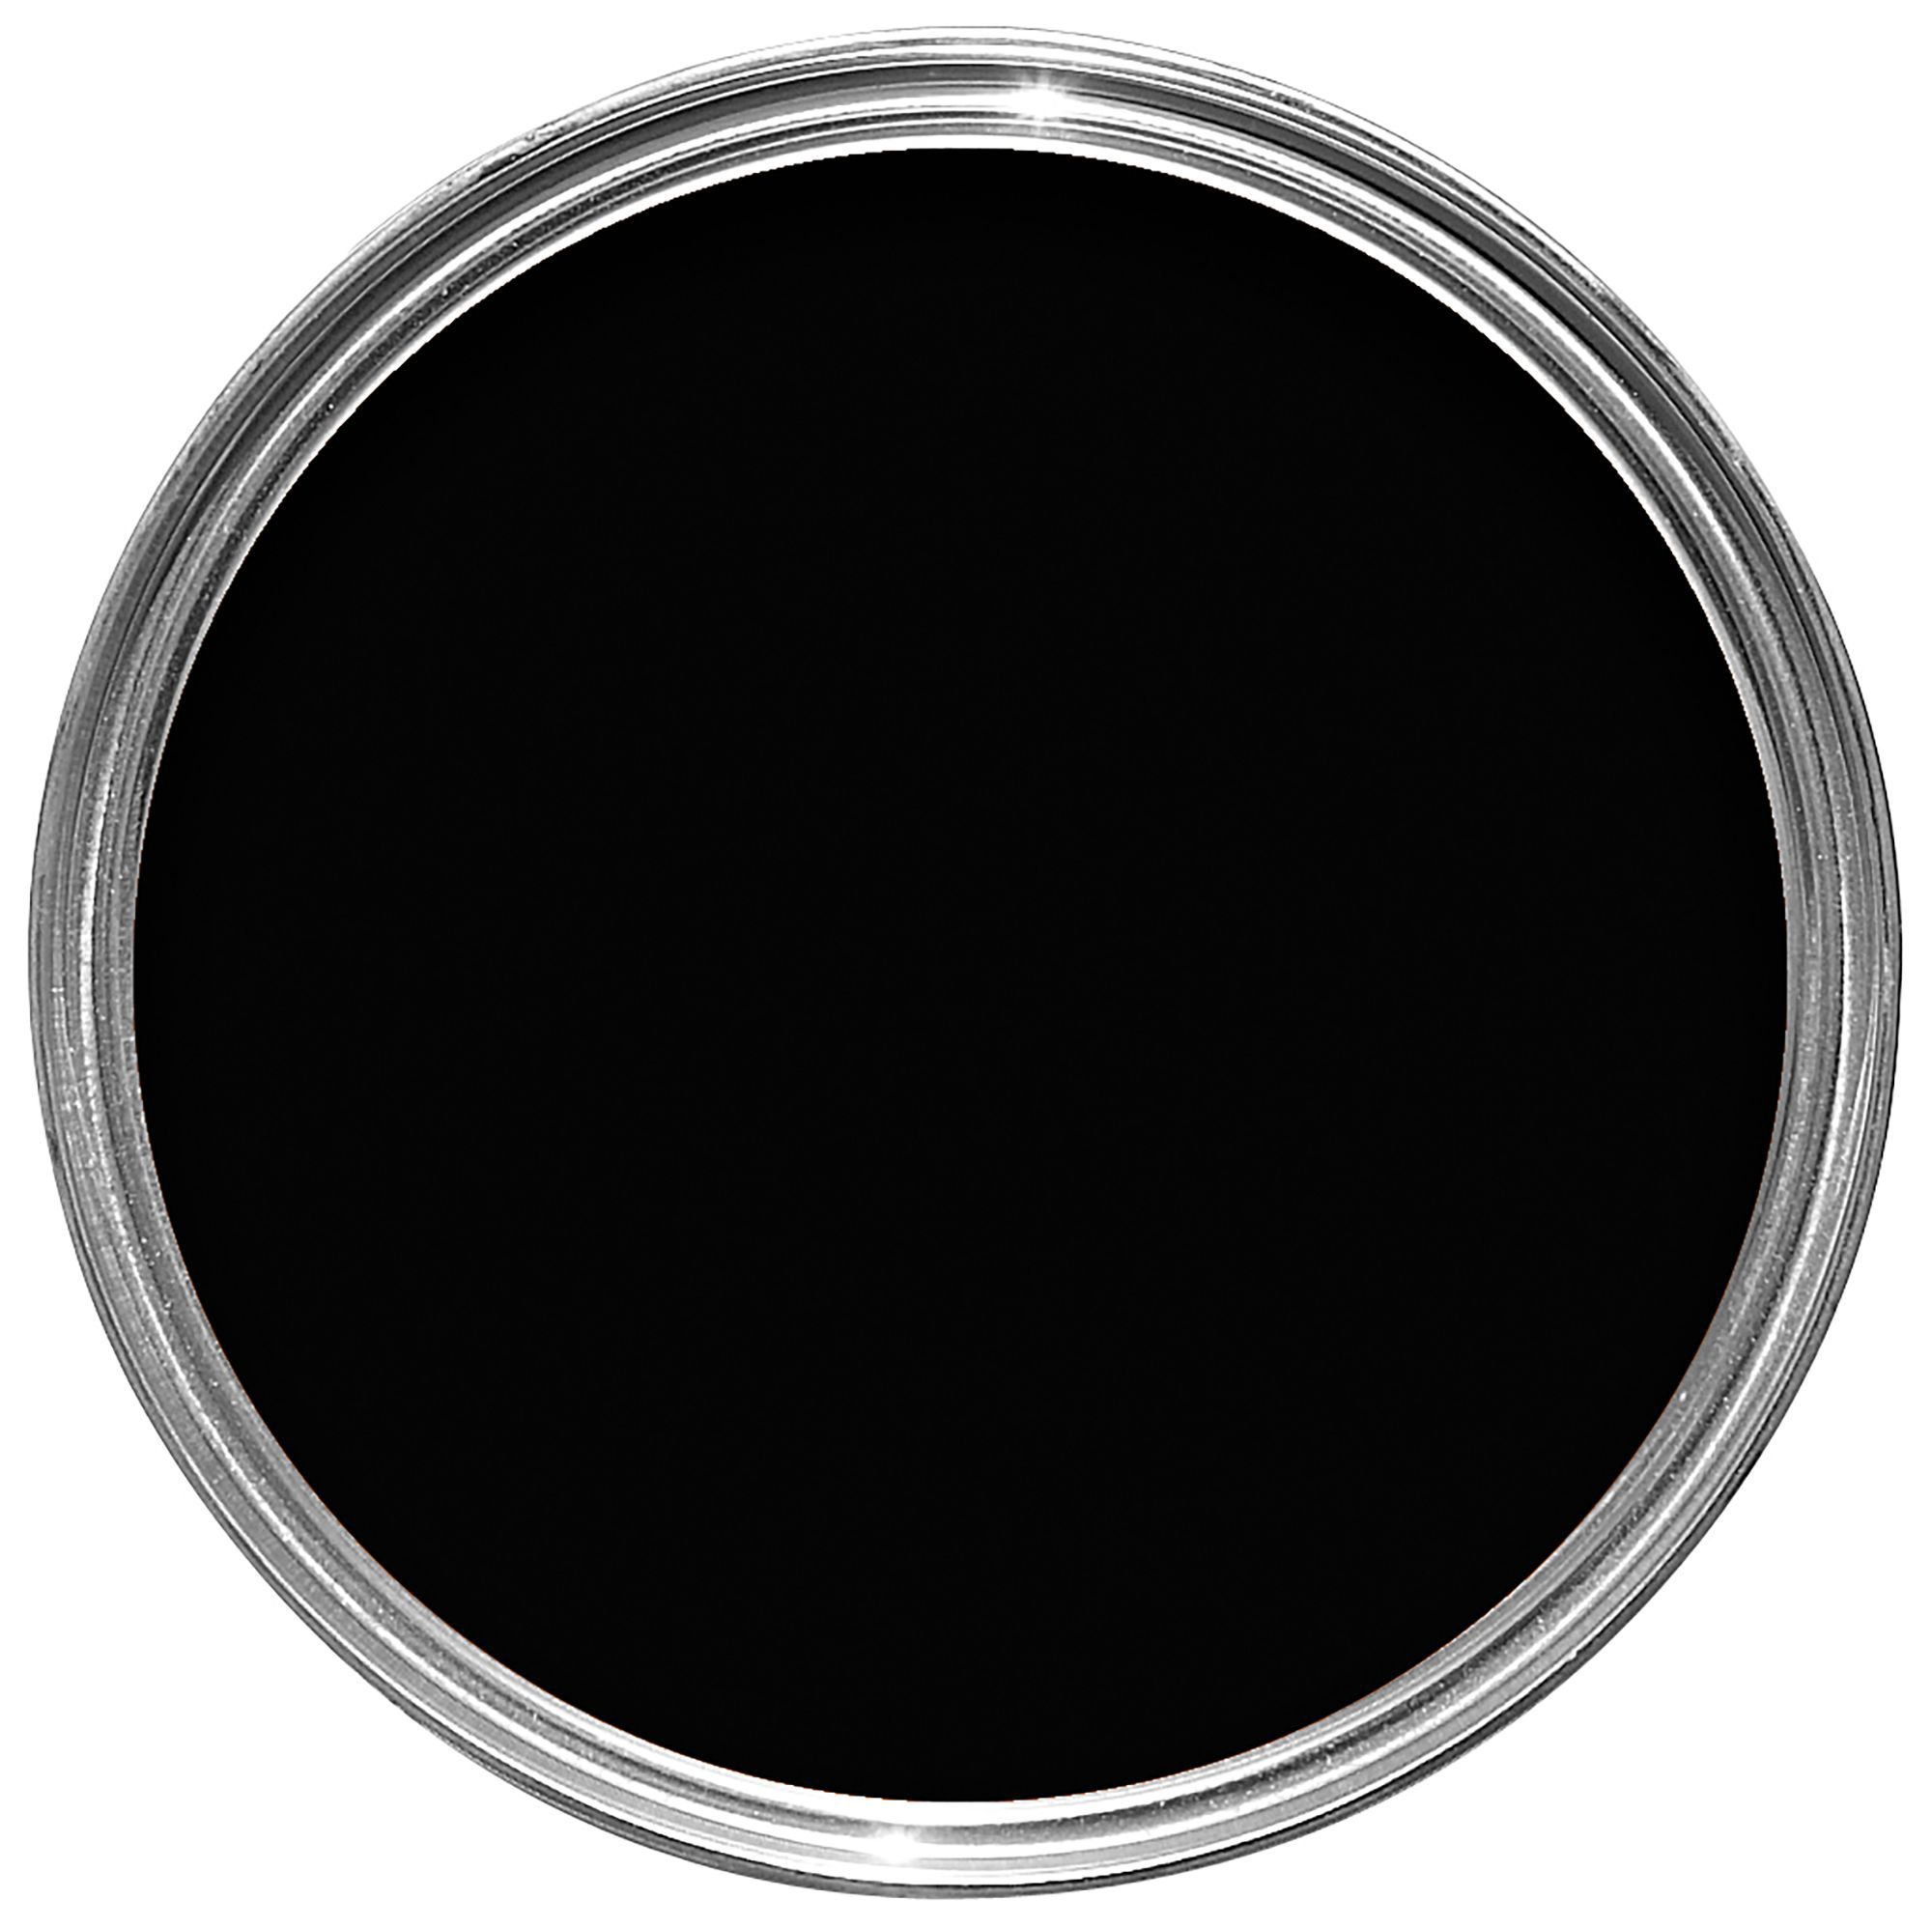 Dulux Weathershield Black Gloss Exterior Metal & wood paint, 750ml